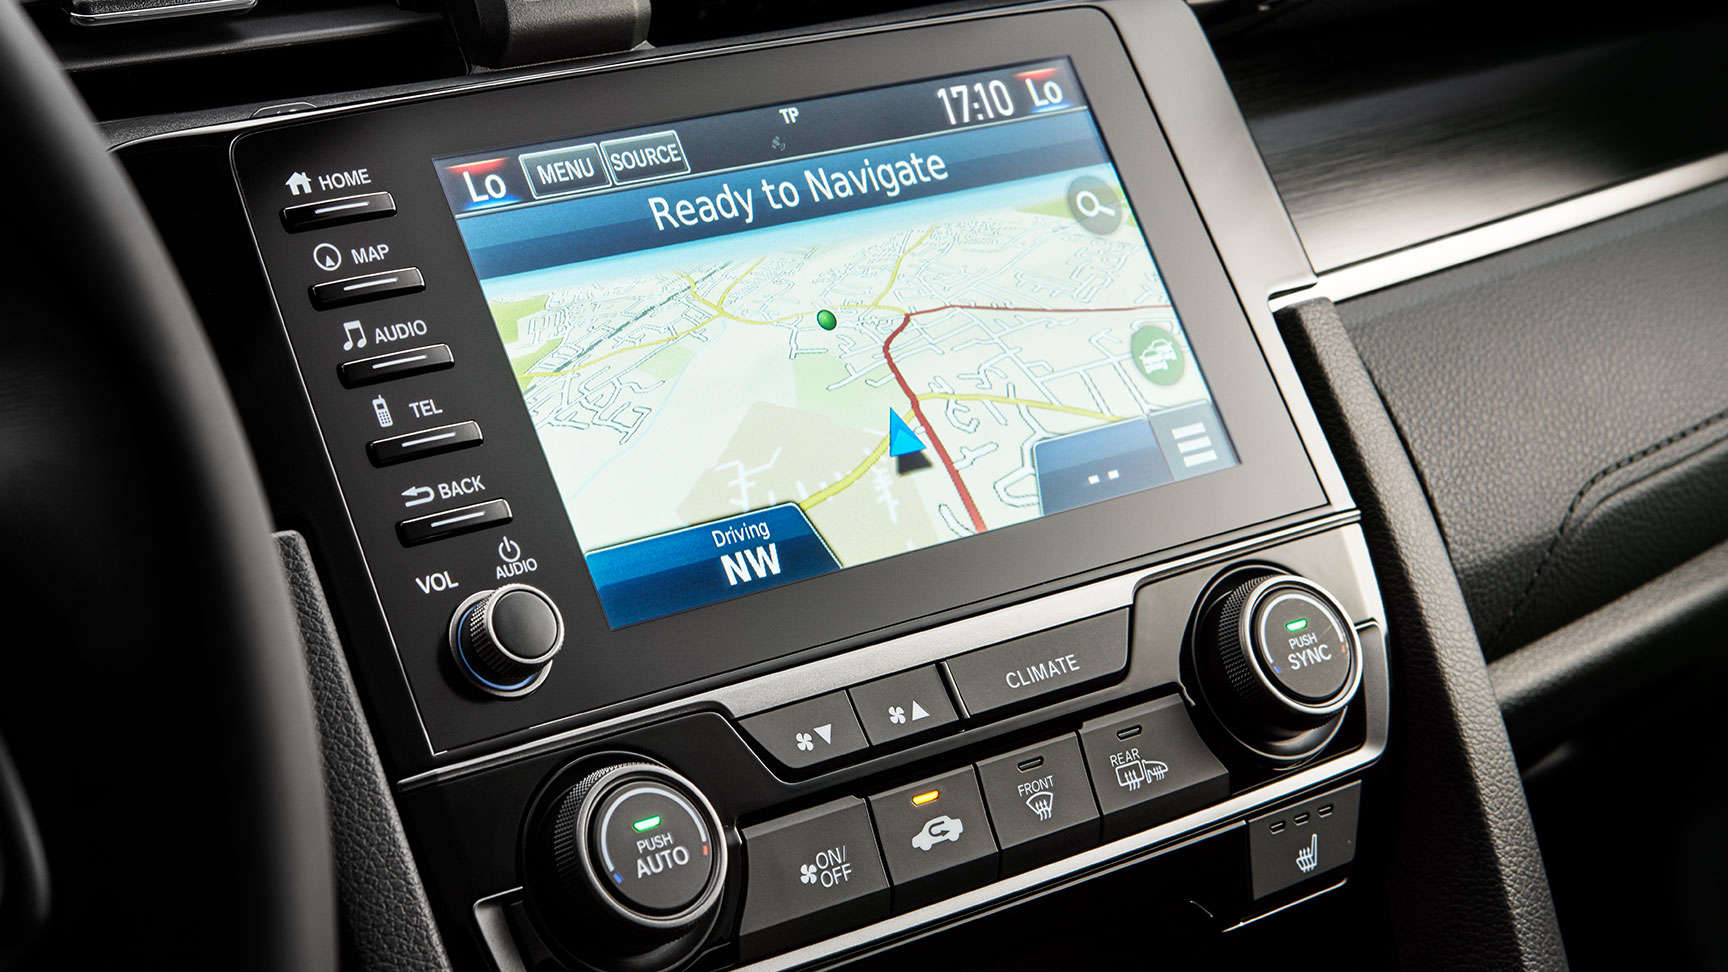 Honda Connect 7' with Garmin navigation